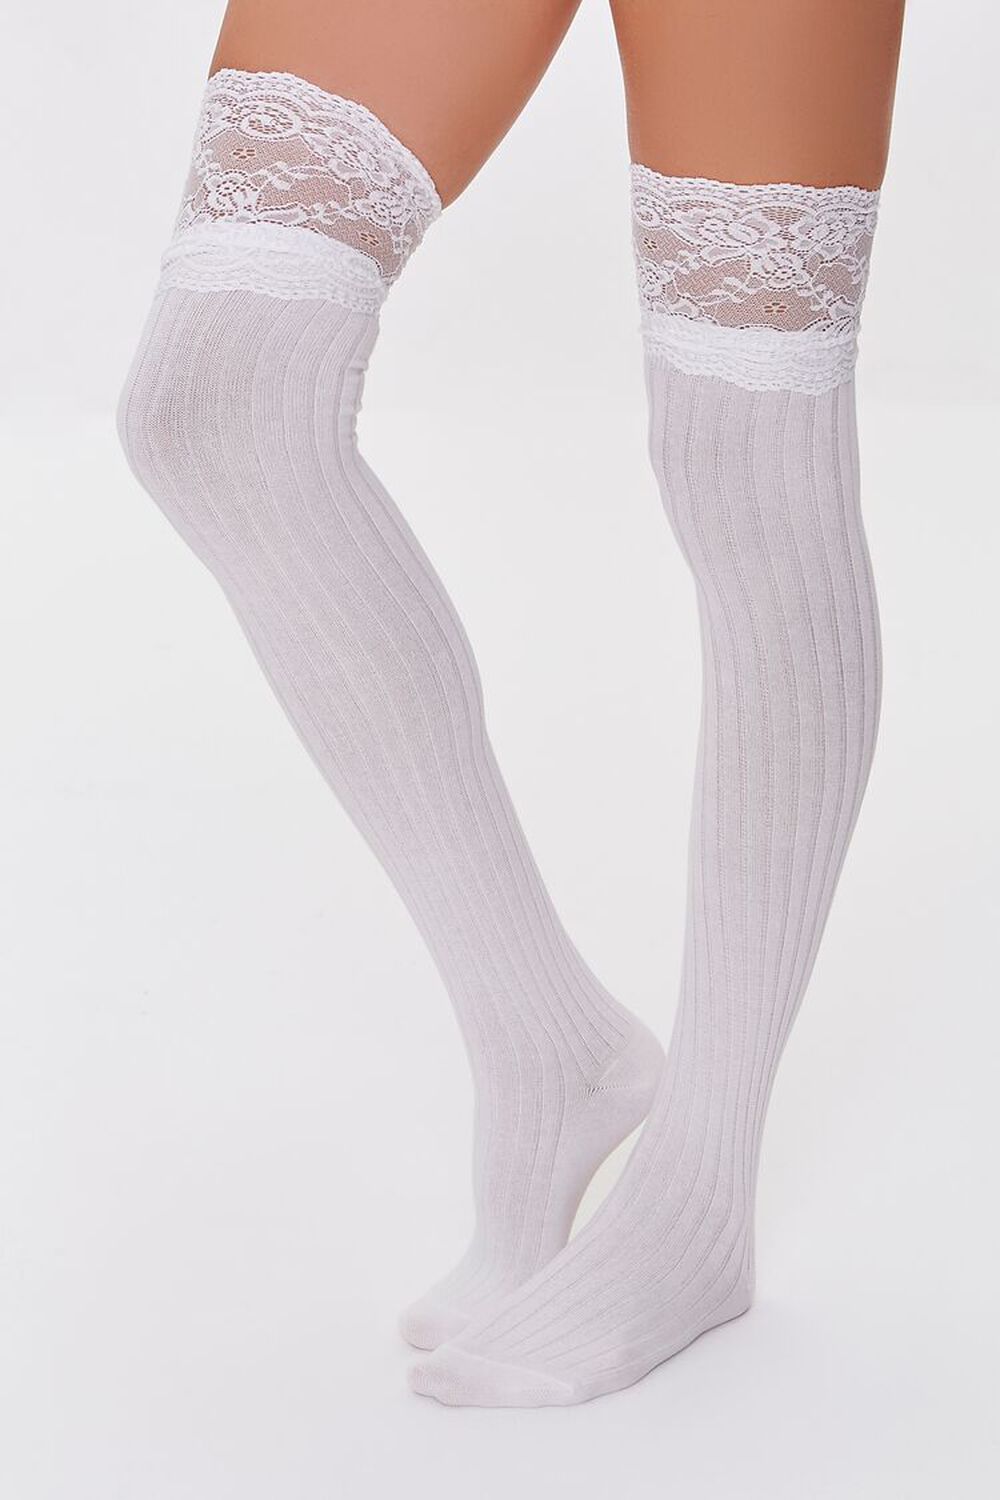 Lace-Trim Thigh-High Socks, image 2